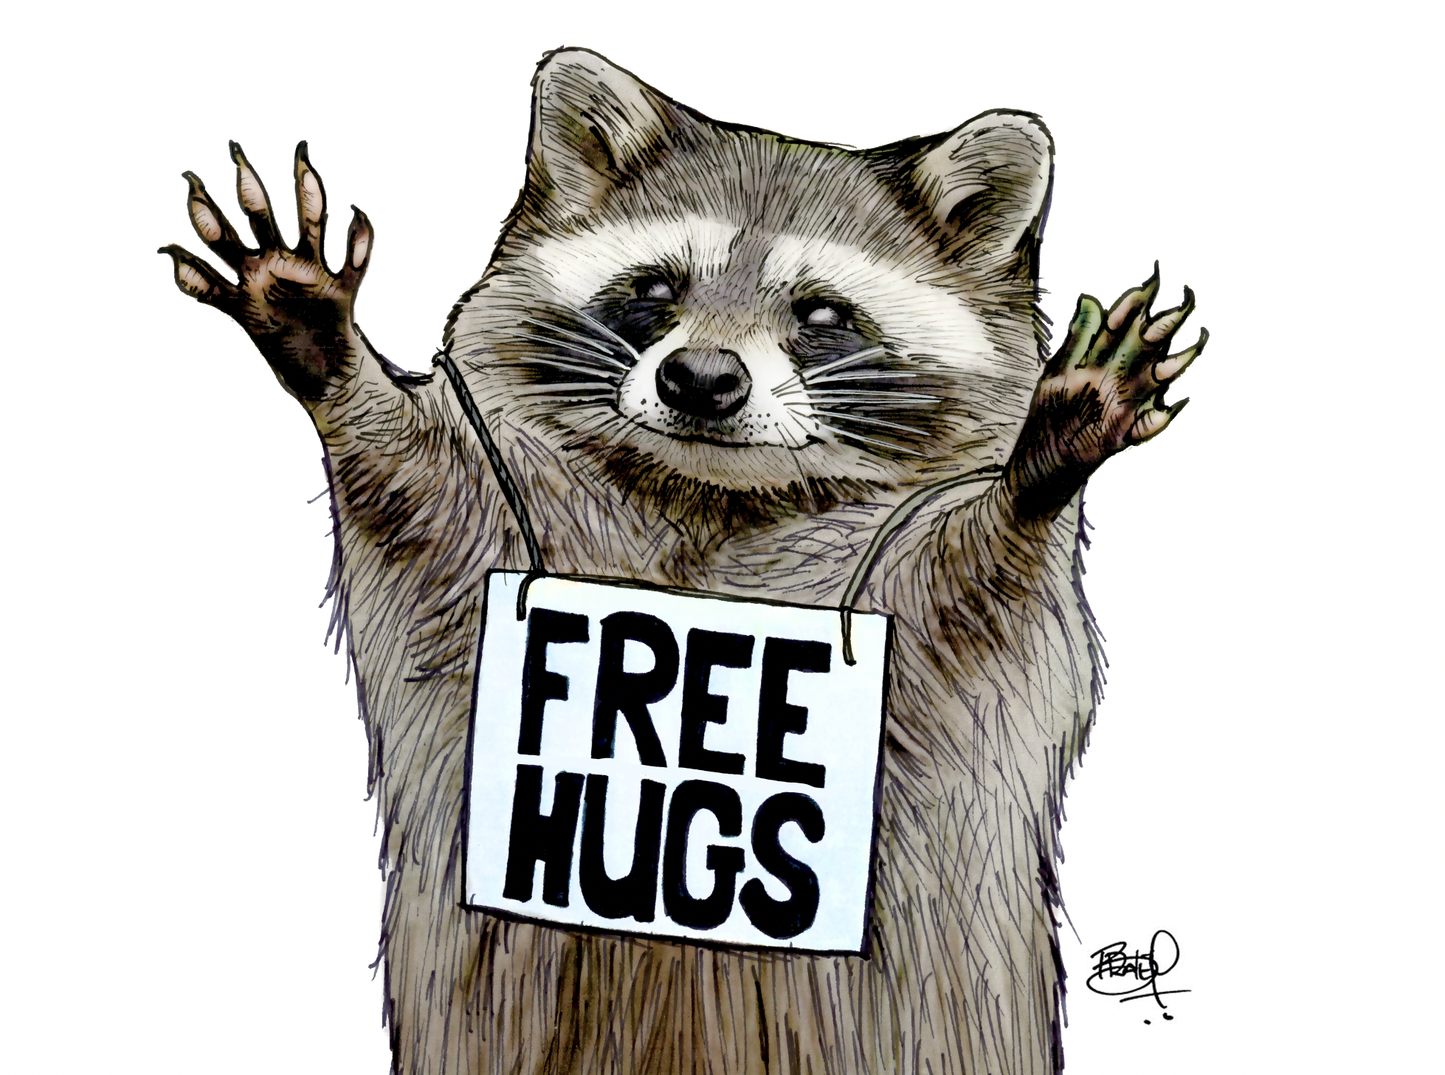 Free Hugs Greeting Card (blank inside) by Shawn Braley Illustration